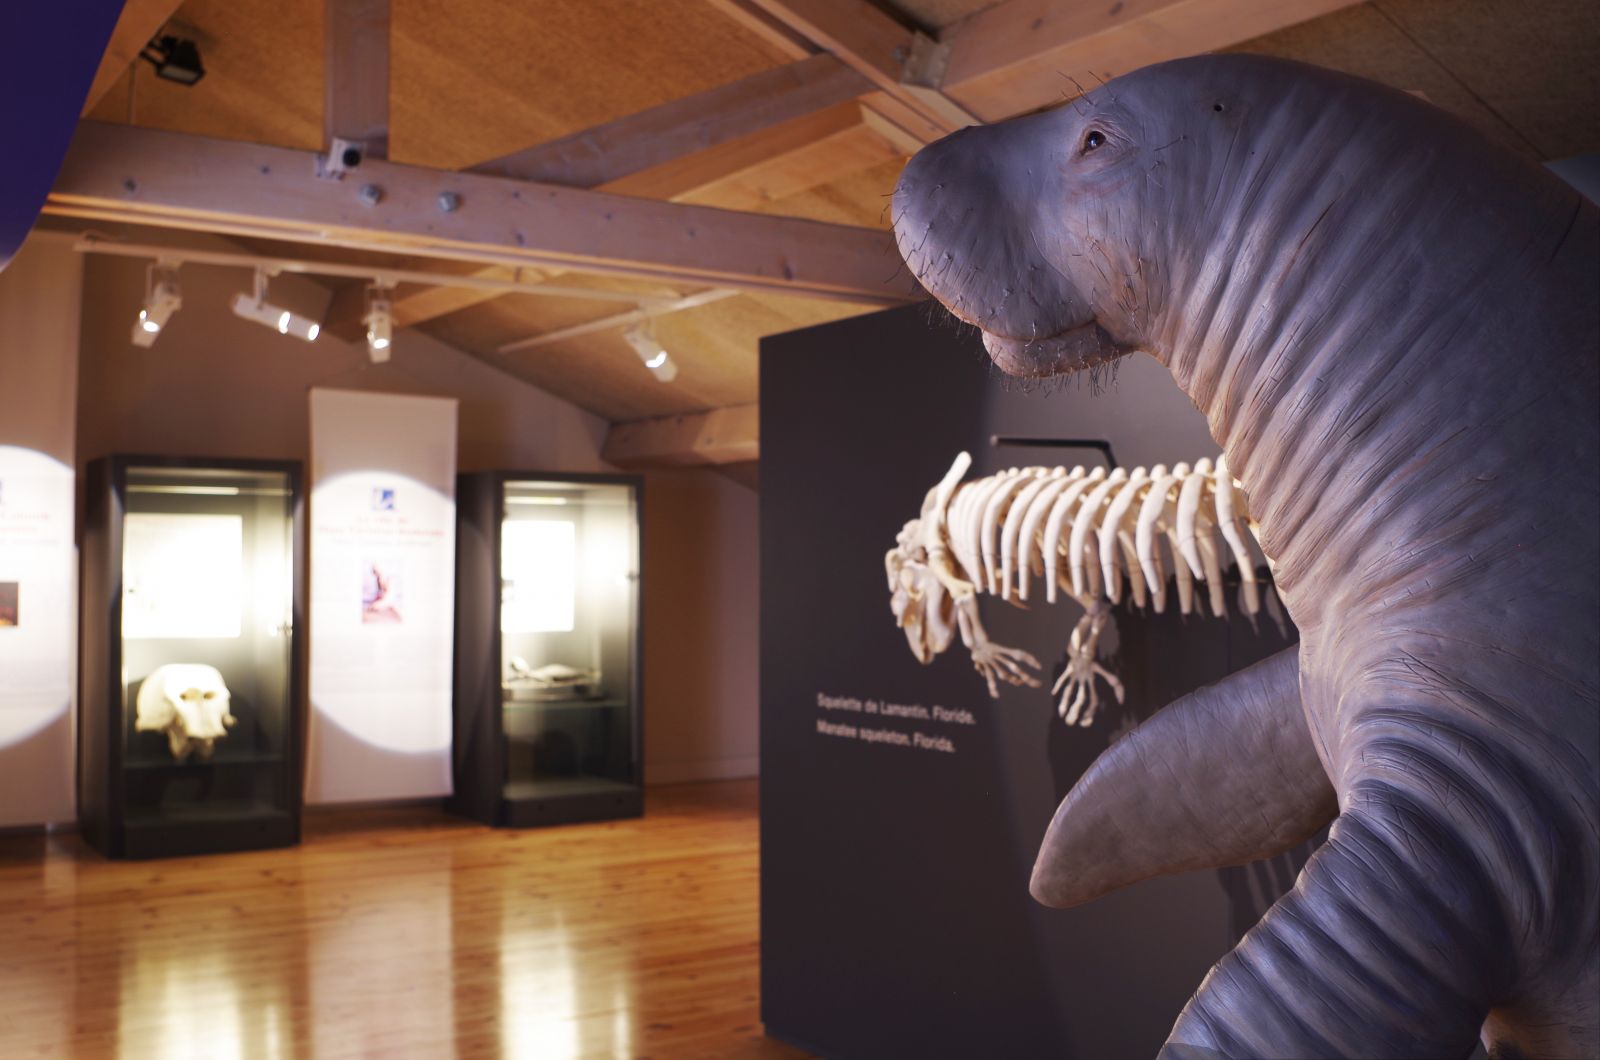 Exposition Sirènes et fossiles